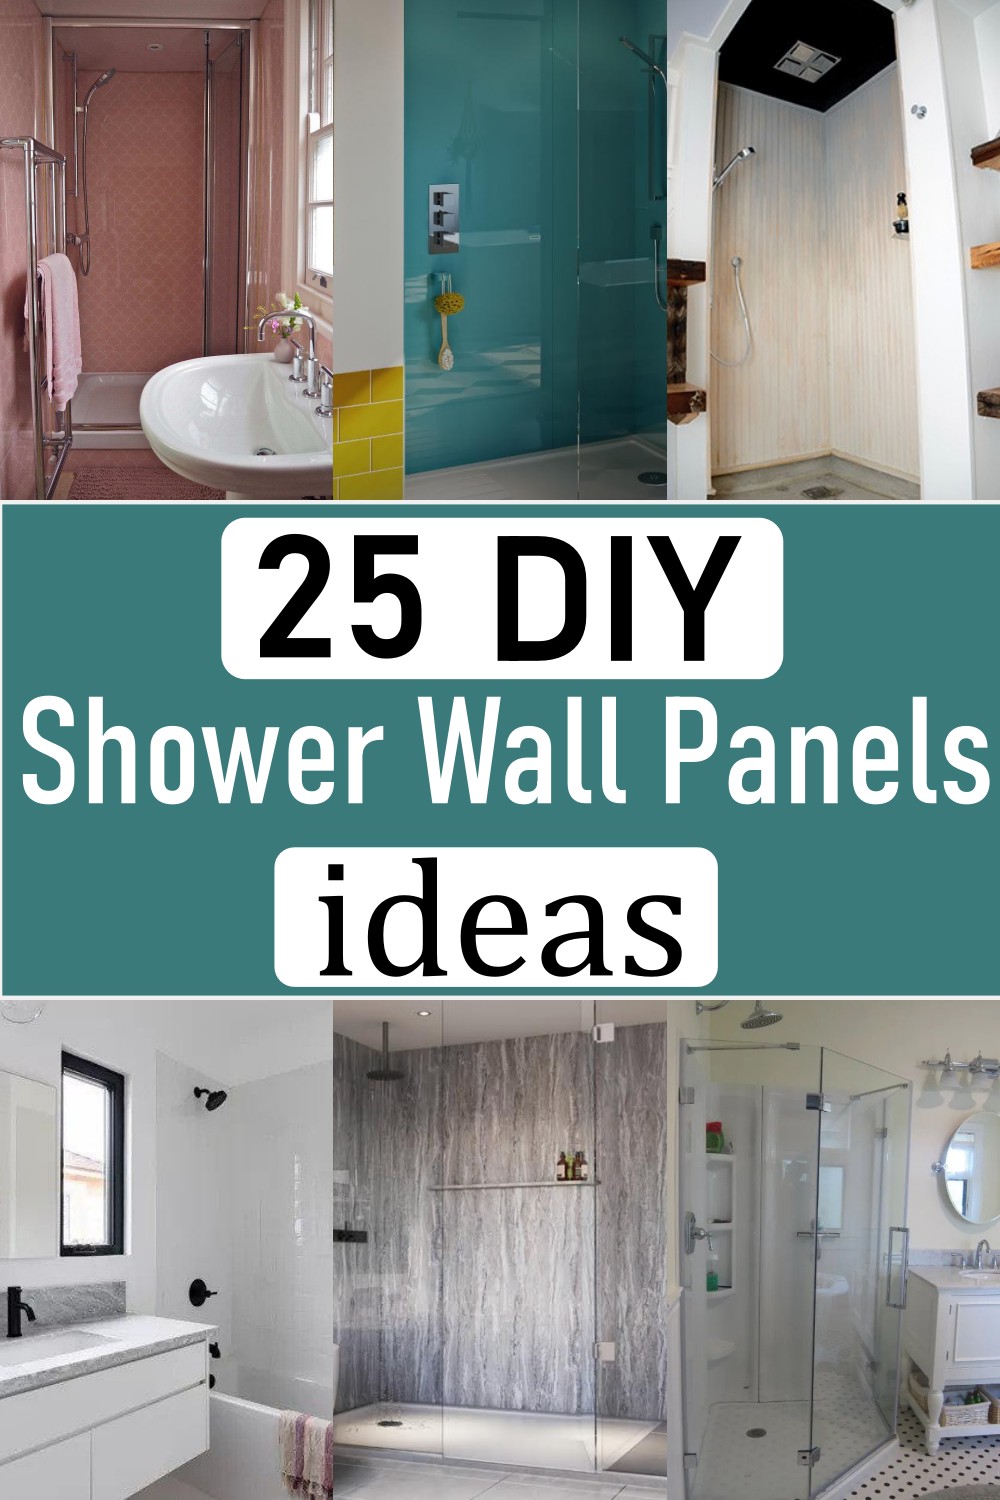 Shower Wall Panels 